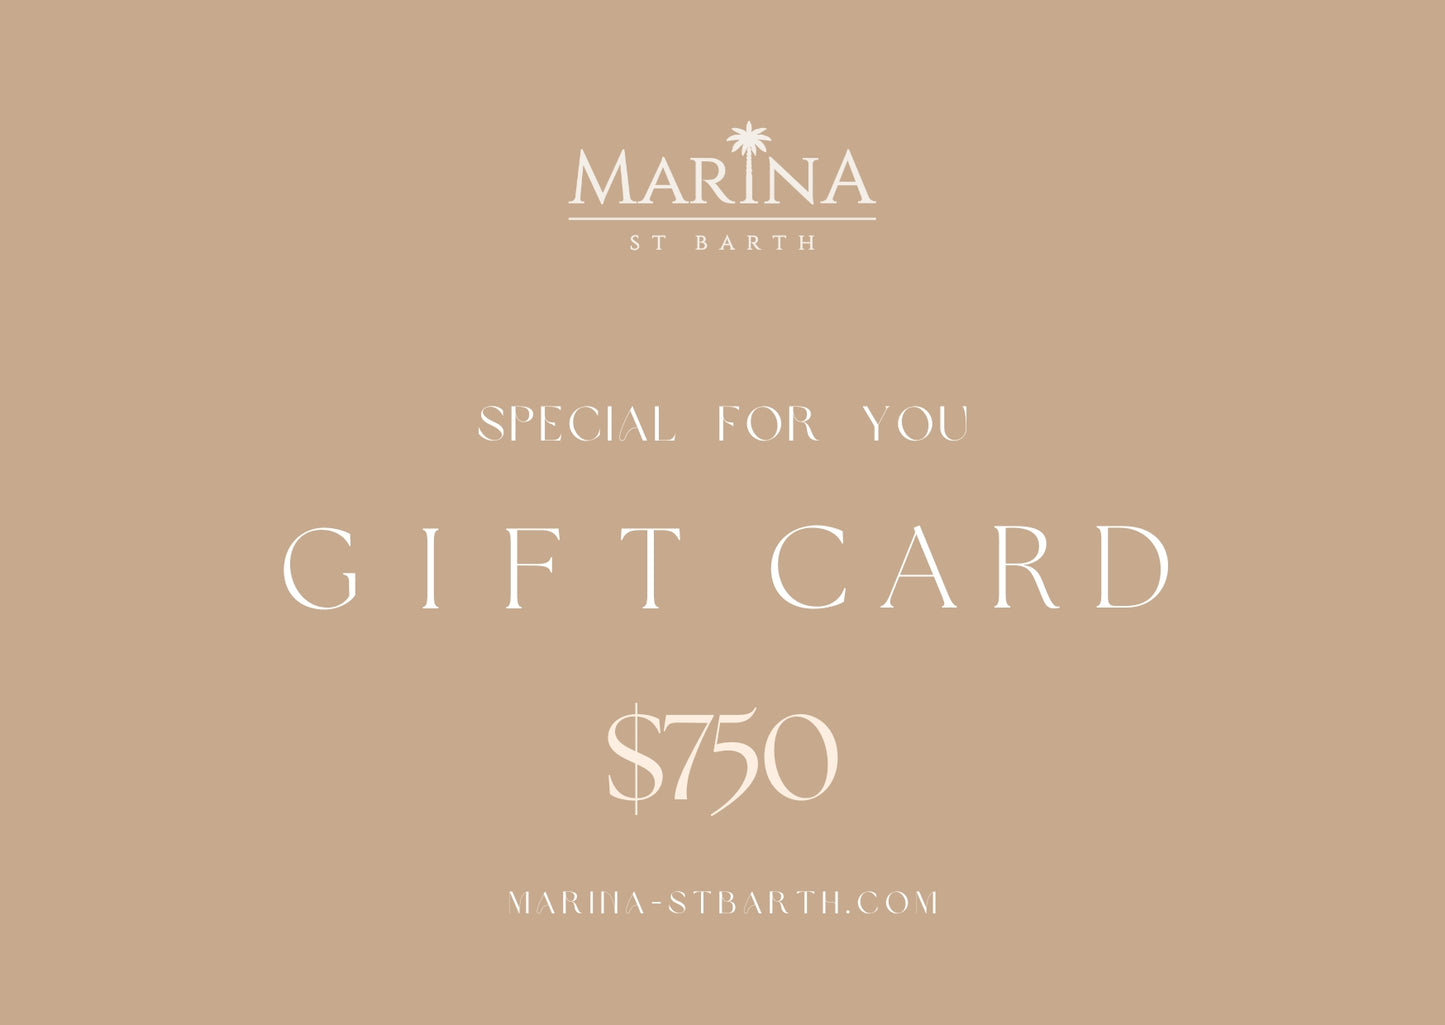 GIFT CARD - Premium Giftcard from Marina St Barth - Just $200! Shop now at Marina St Barth